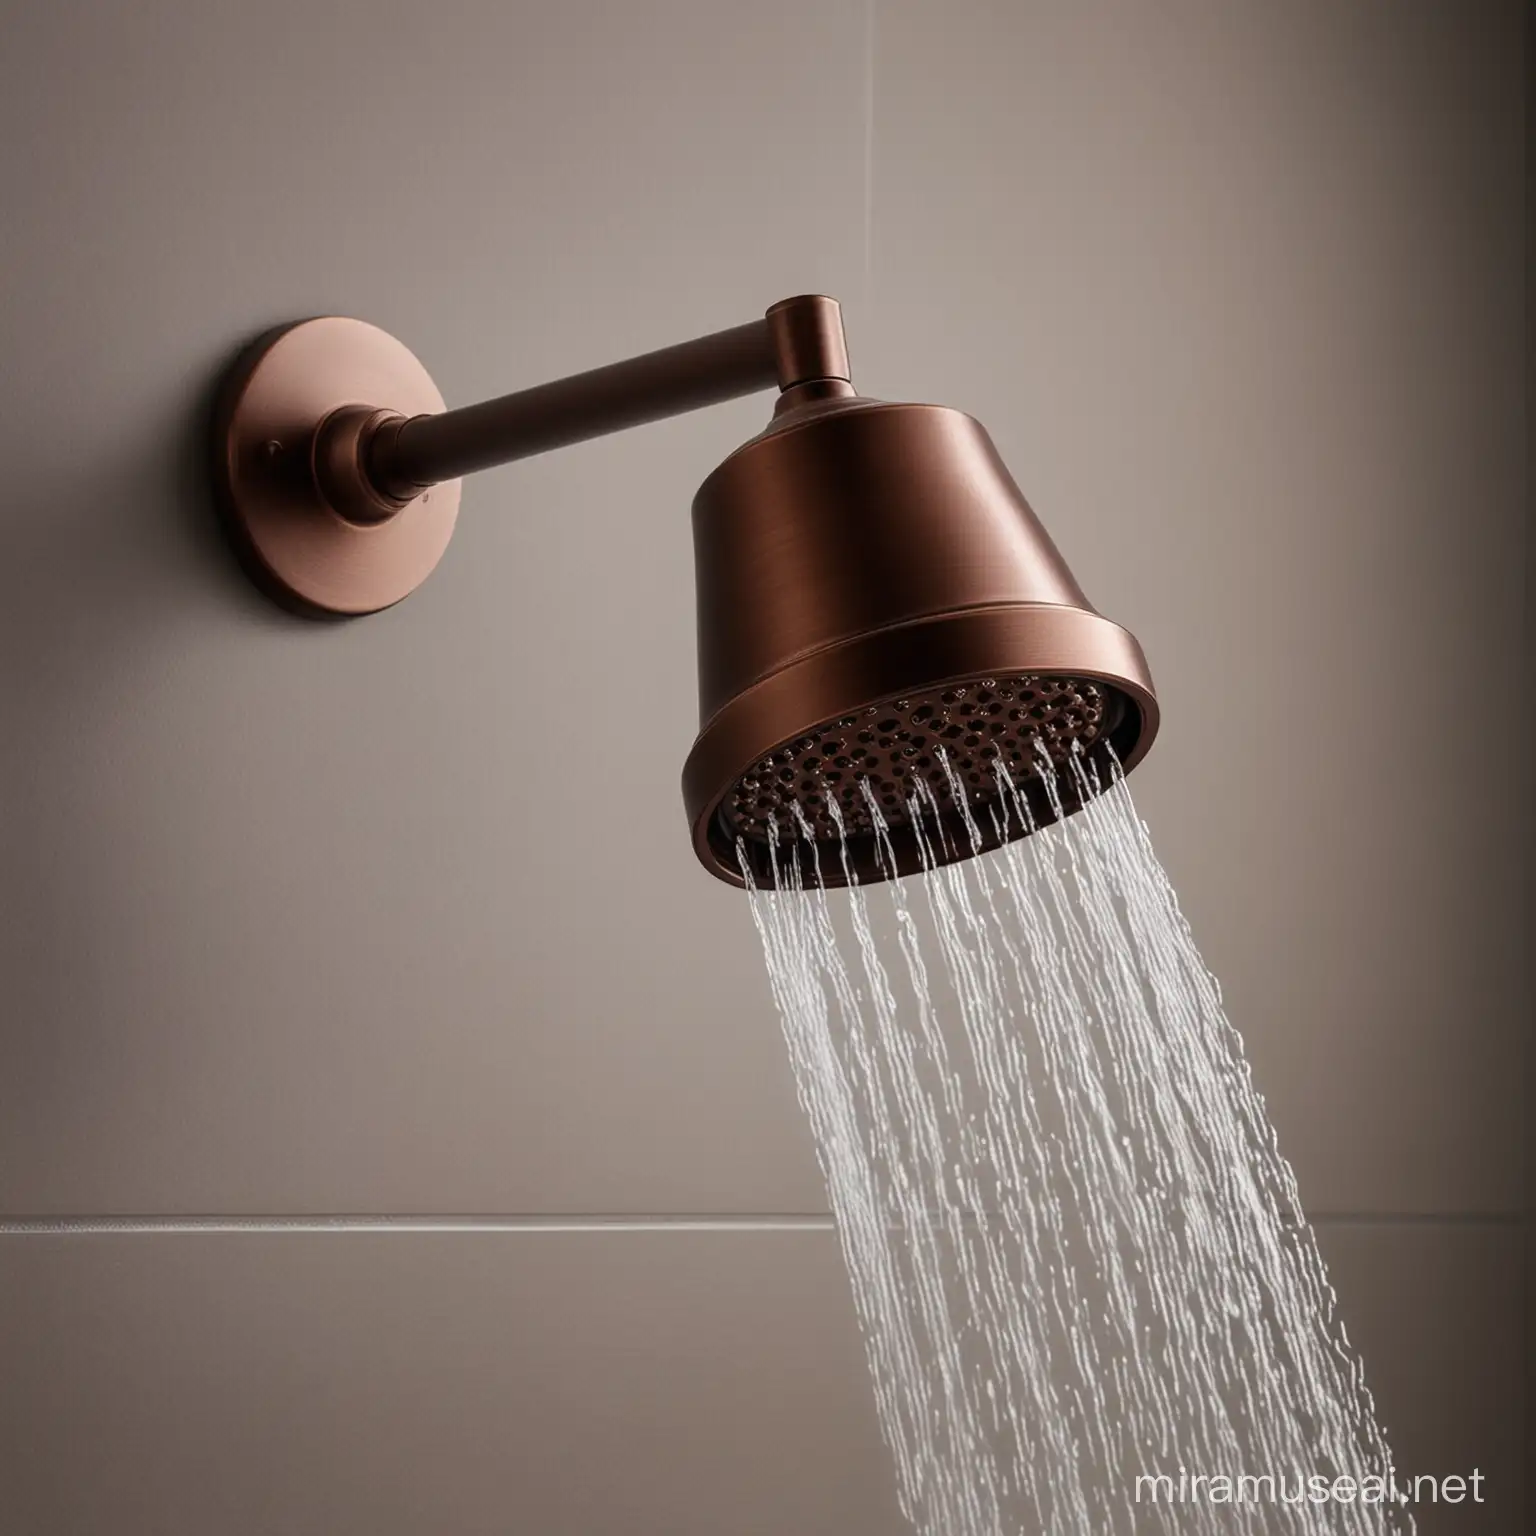 Elegant Dark Copper Rainfall Shower Head for Luxurious Bathroom Experience